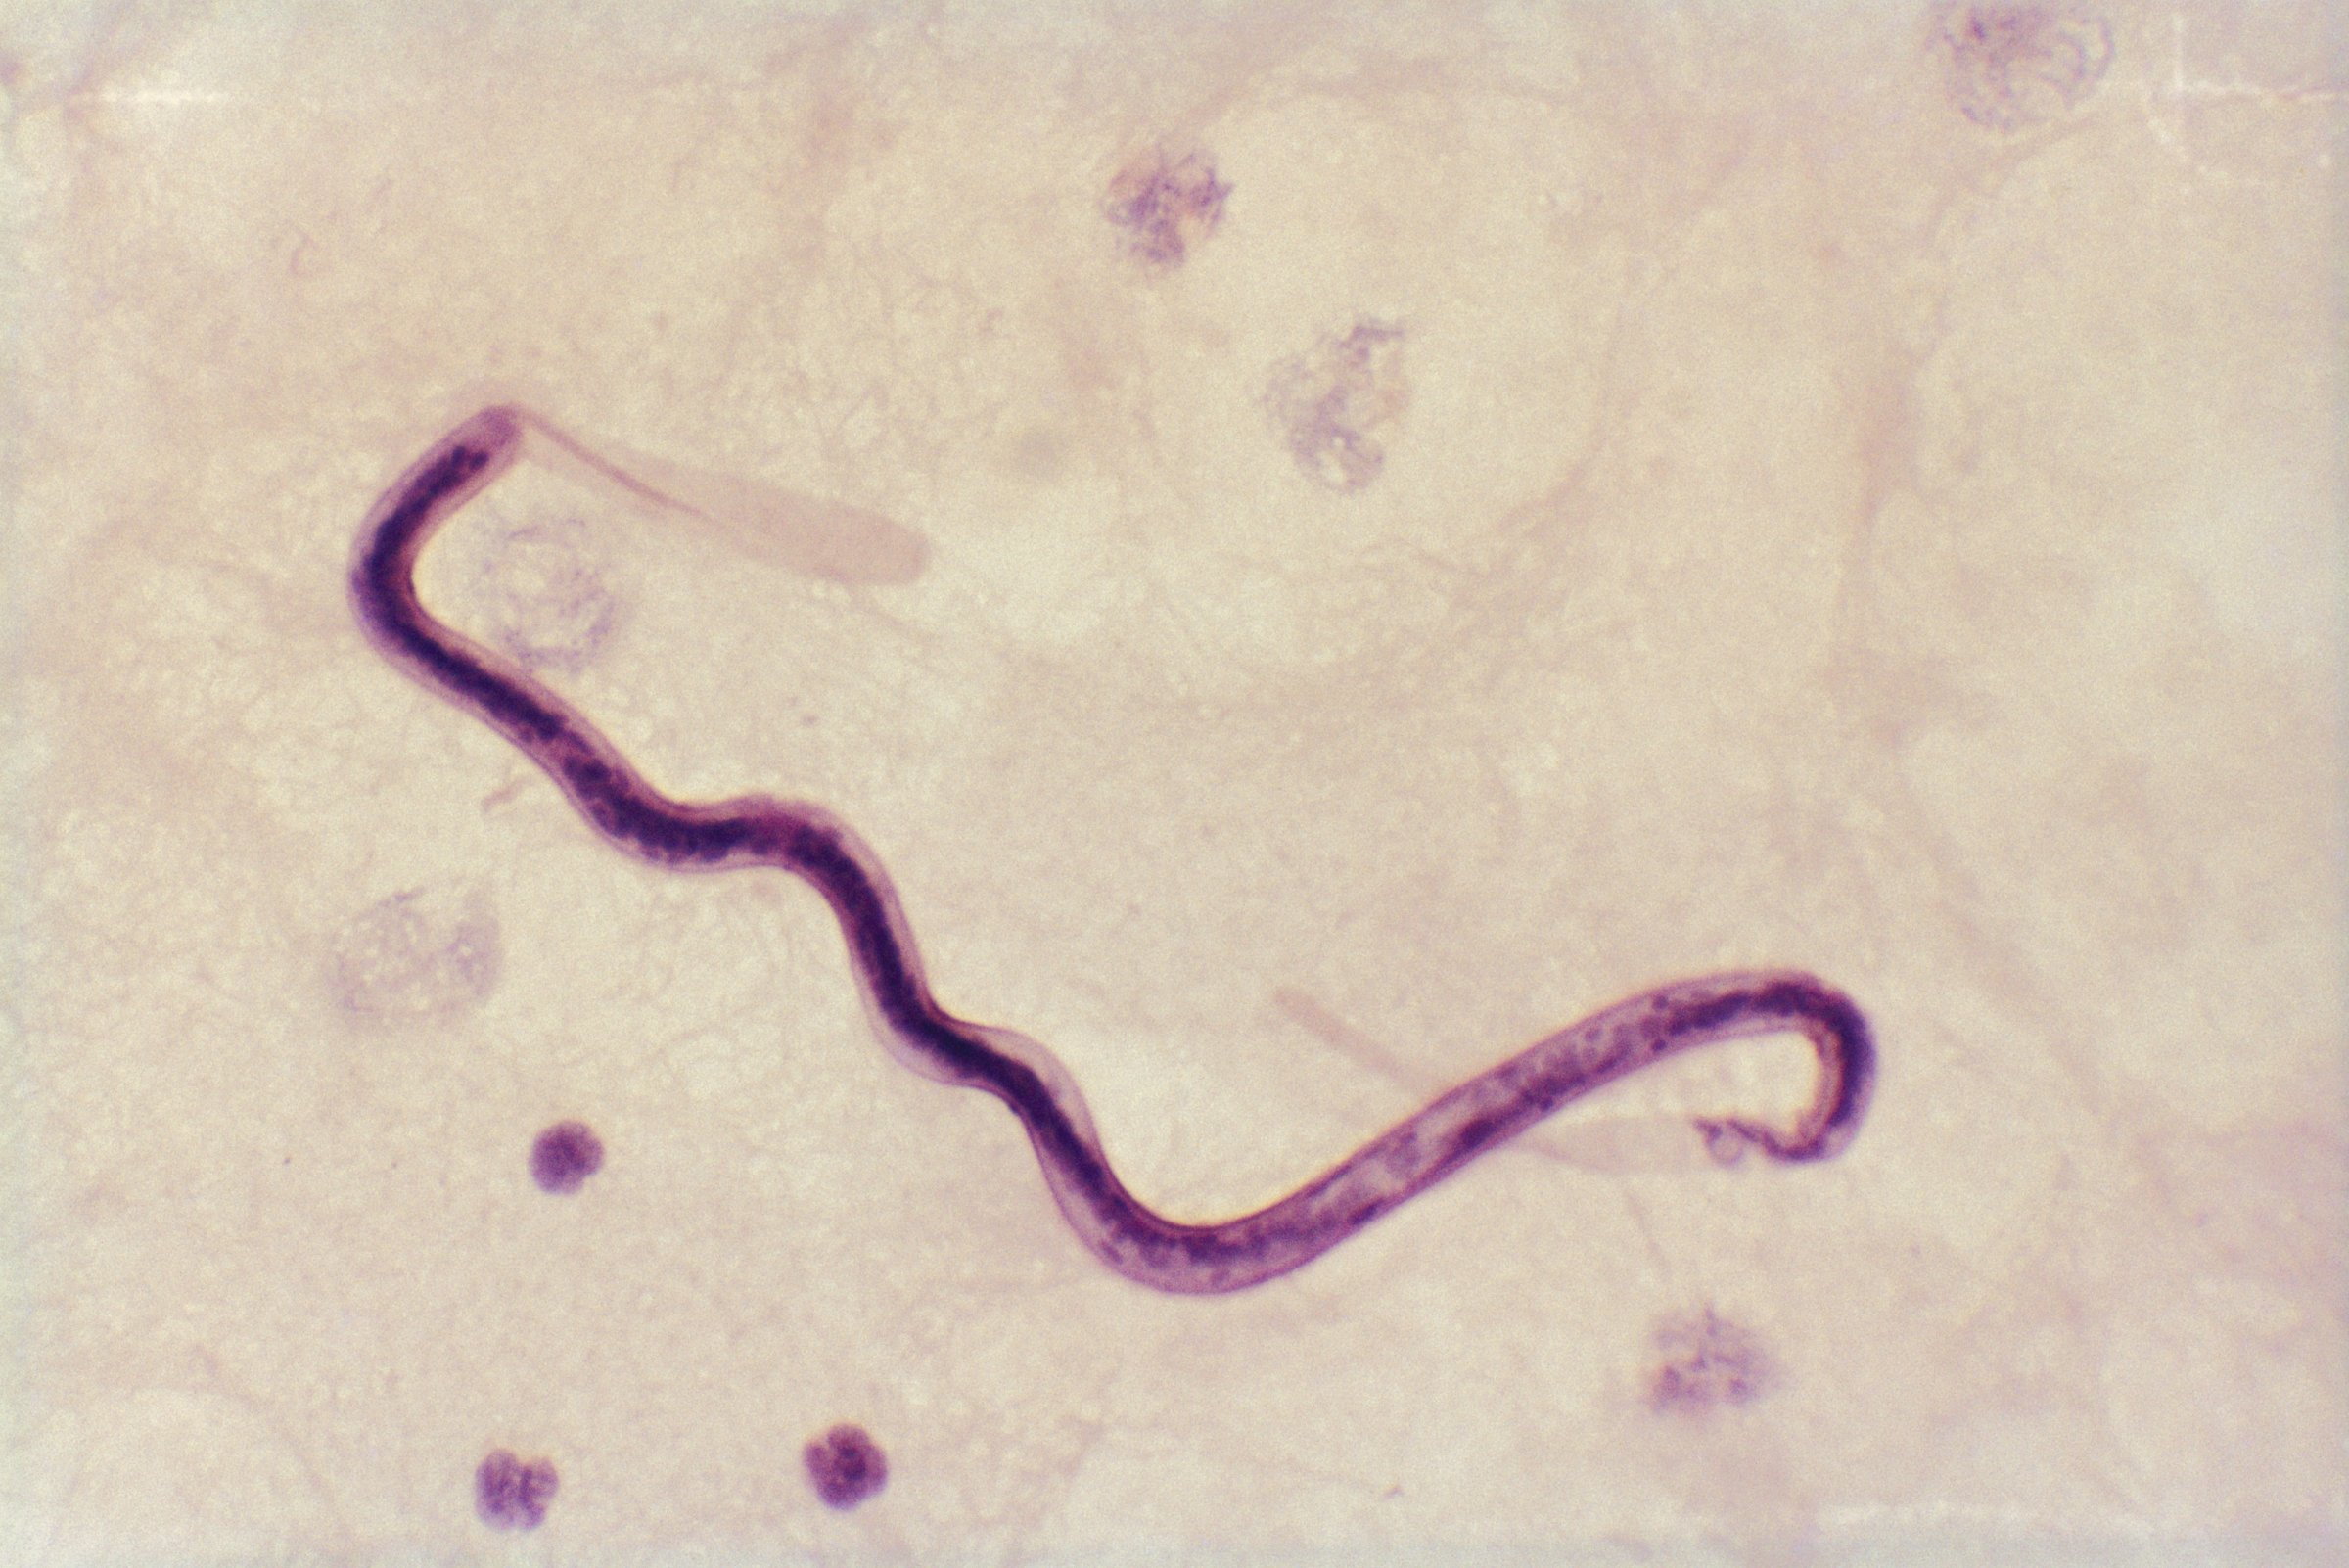 loa loa worm parasite